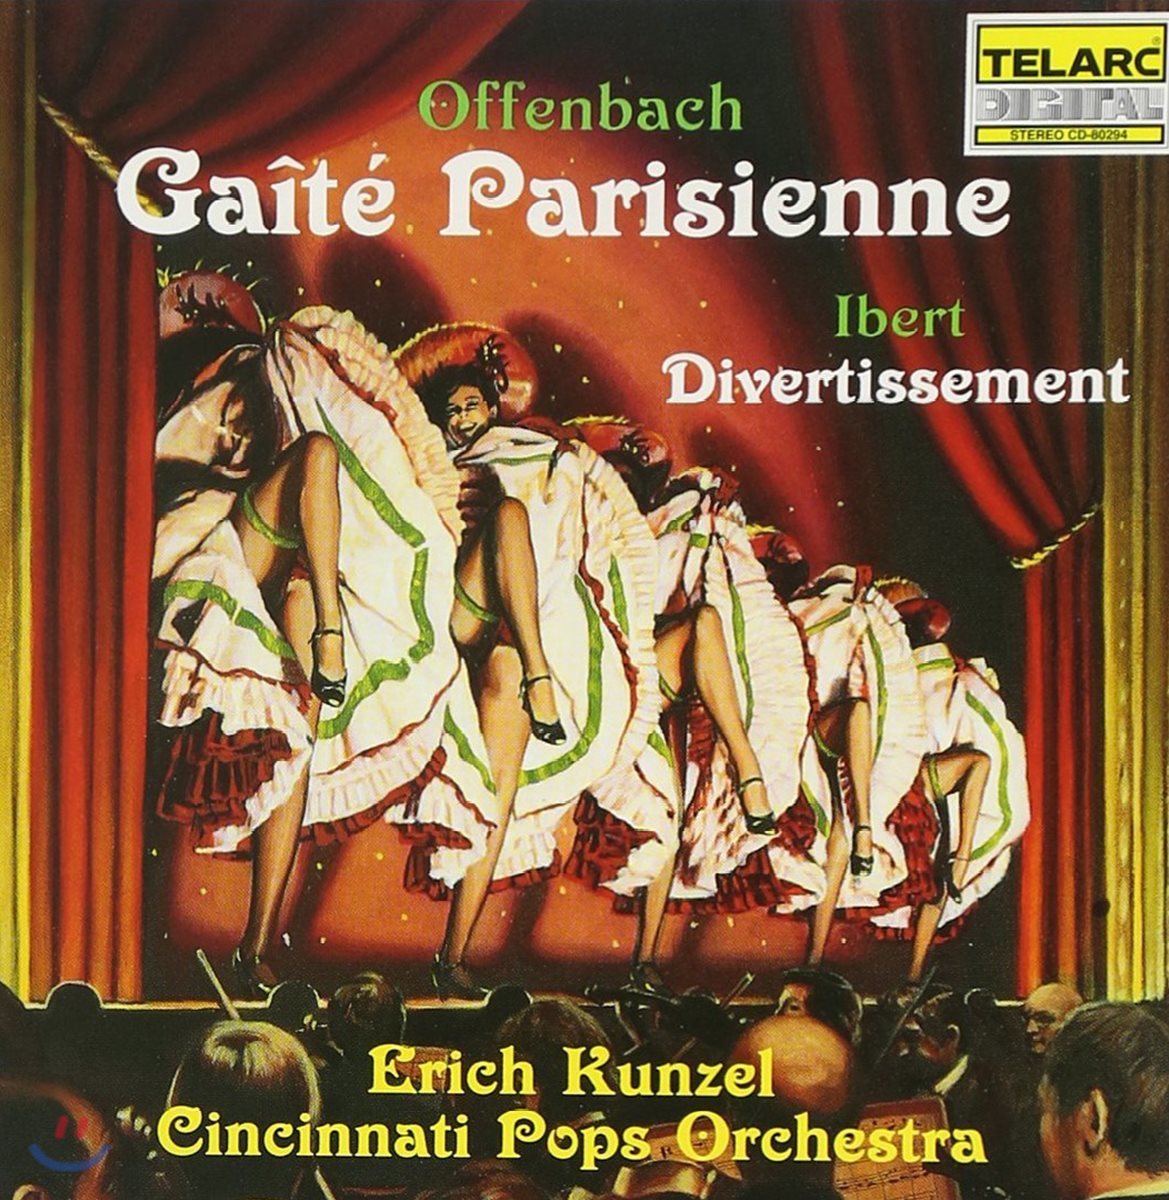 Erich Kunzel 오펜바흐: 유쾌한 파리인 / 이베르: 디베르티스망 - 에리히 쿤젤, 신시내티 팝스 오케스트라 (Offenbach: Gaite Parisienne / Ibert: Divertissement)